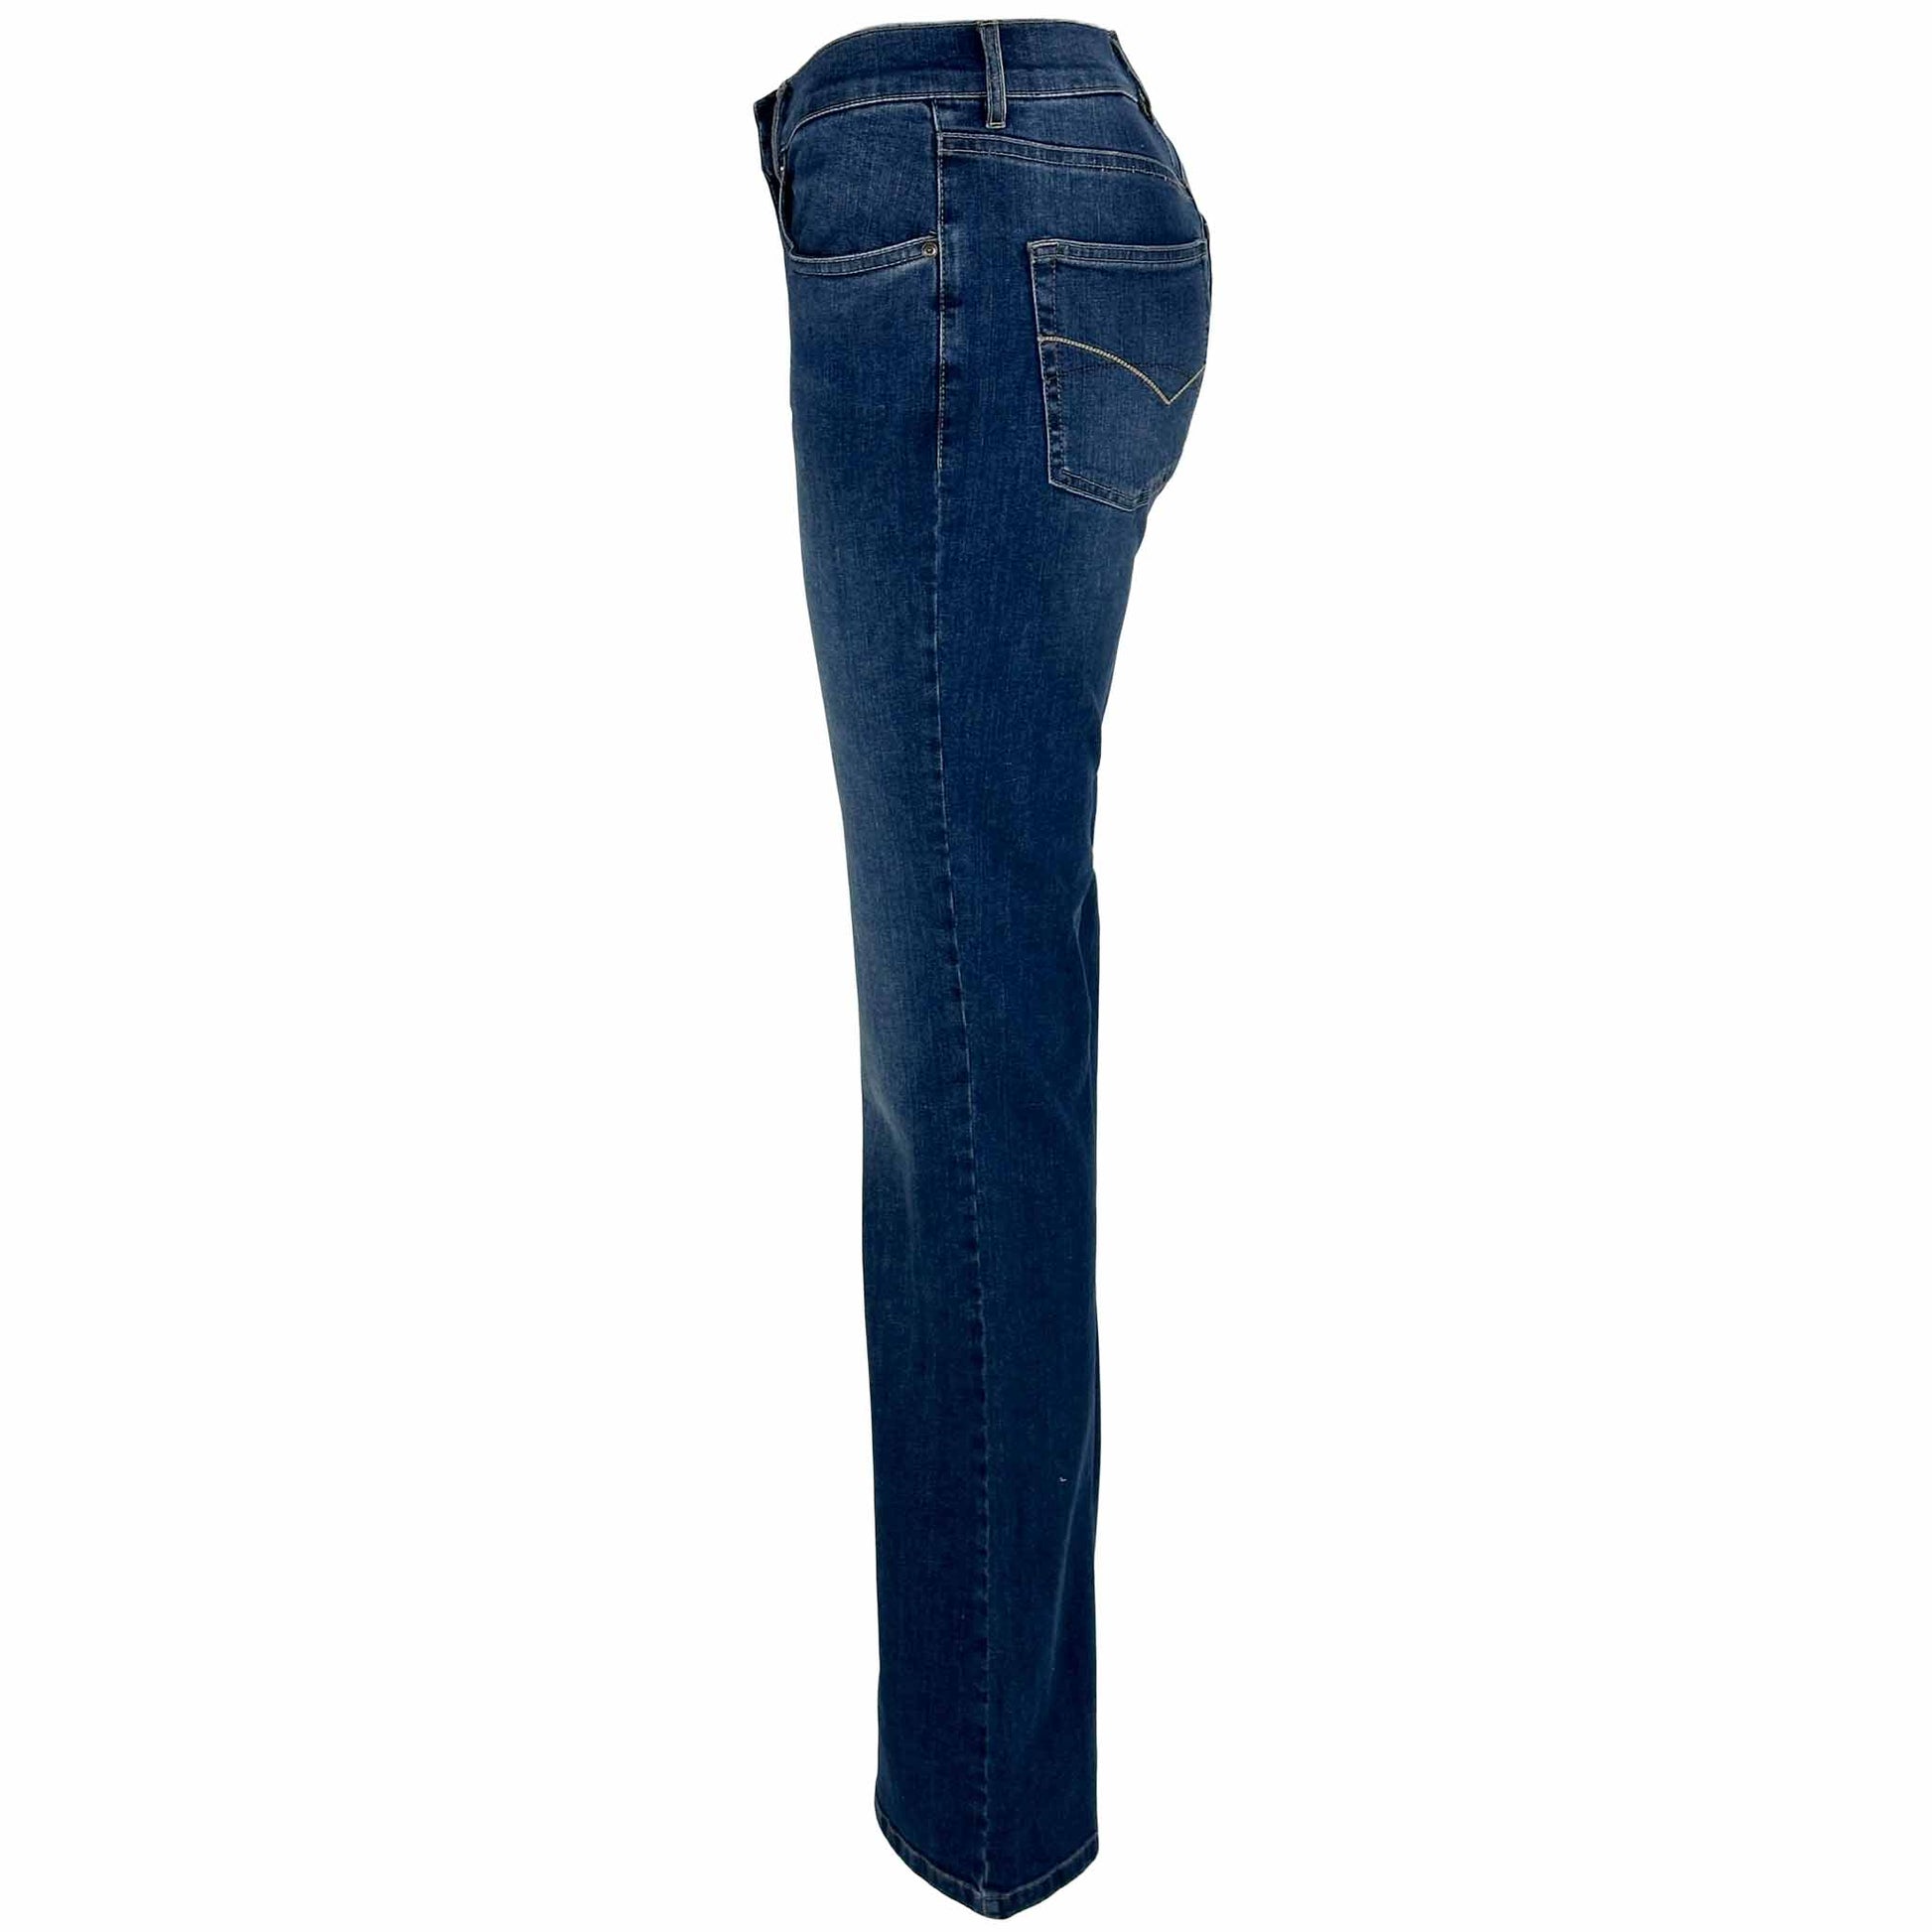 kleding lange vrouwen bloomers jeans sandra dark blue